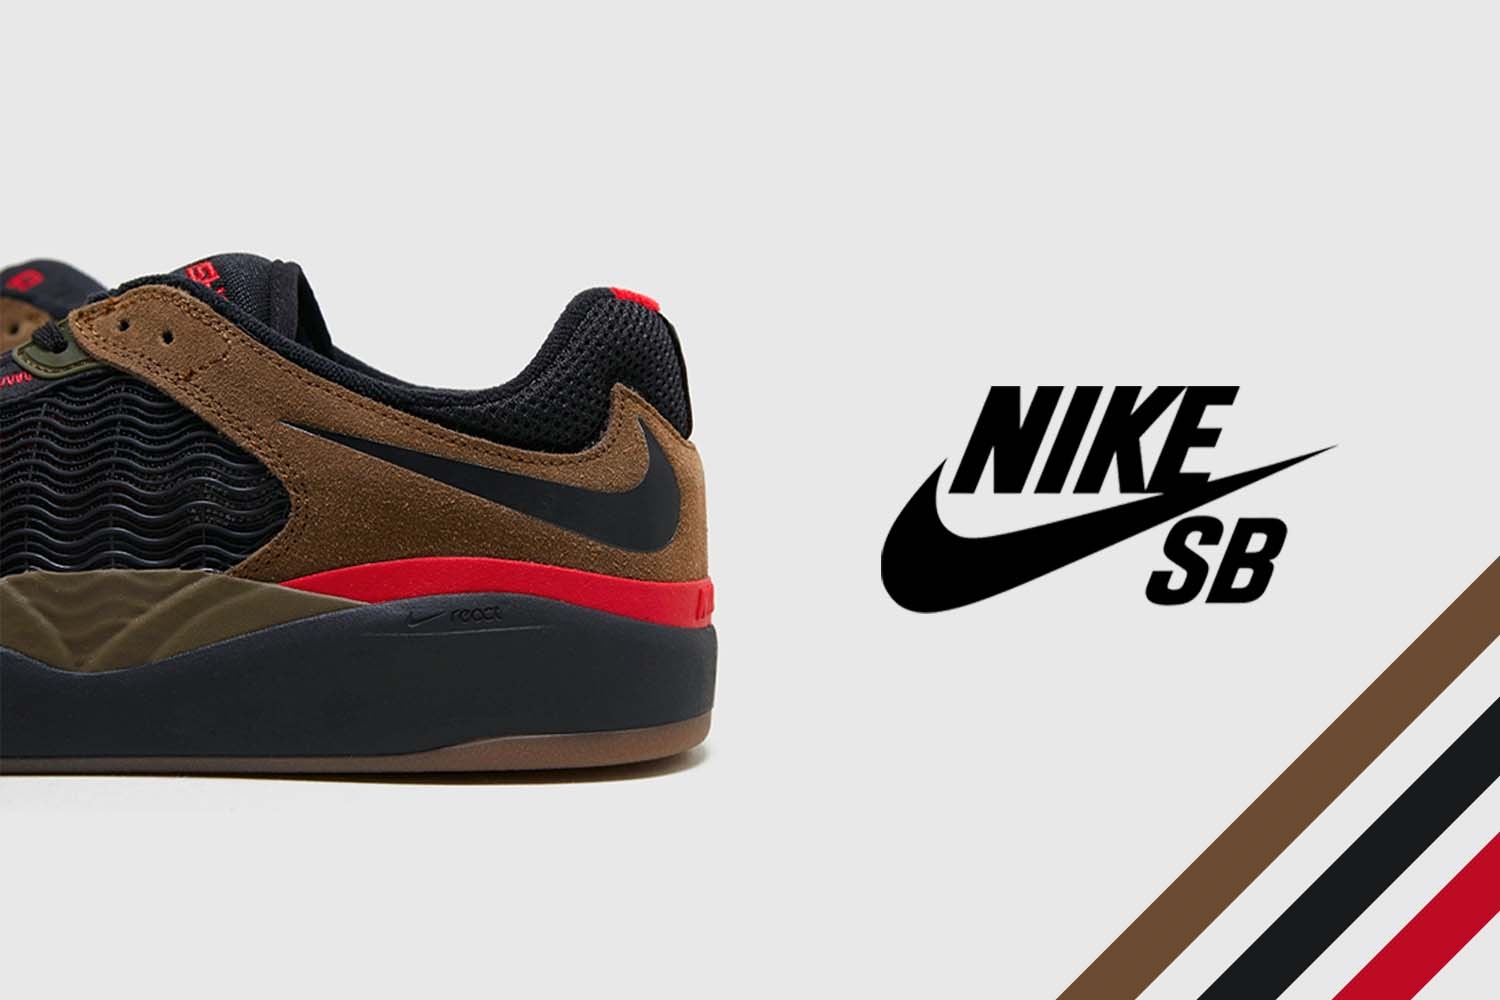 Skater Ishod Wair gets his own Nike SB signature sneaker